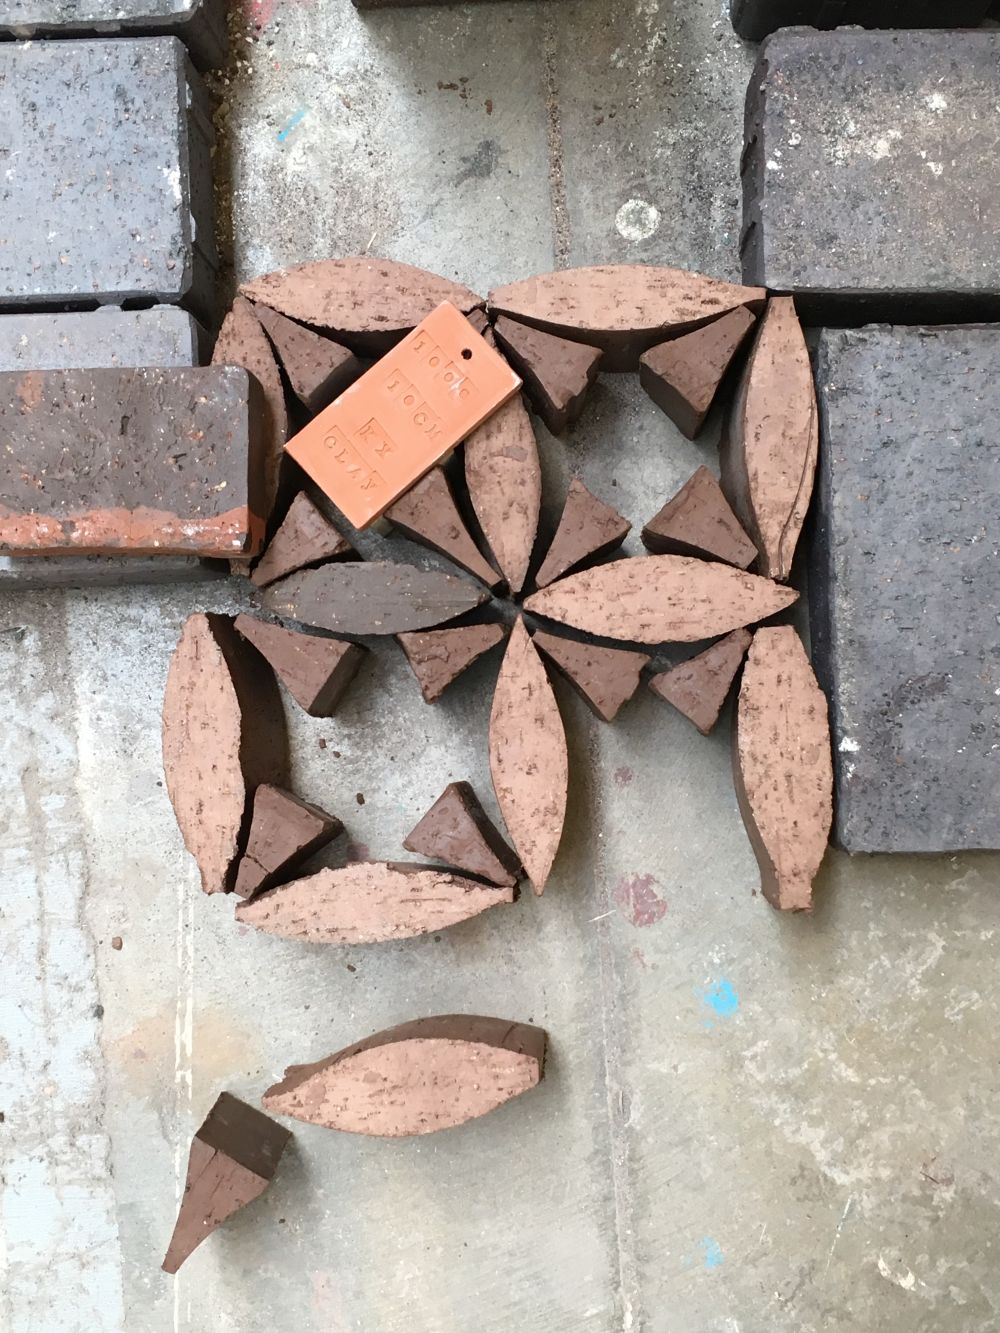 Bricks in arrangement